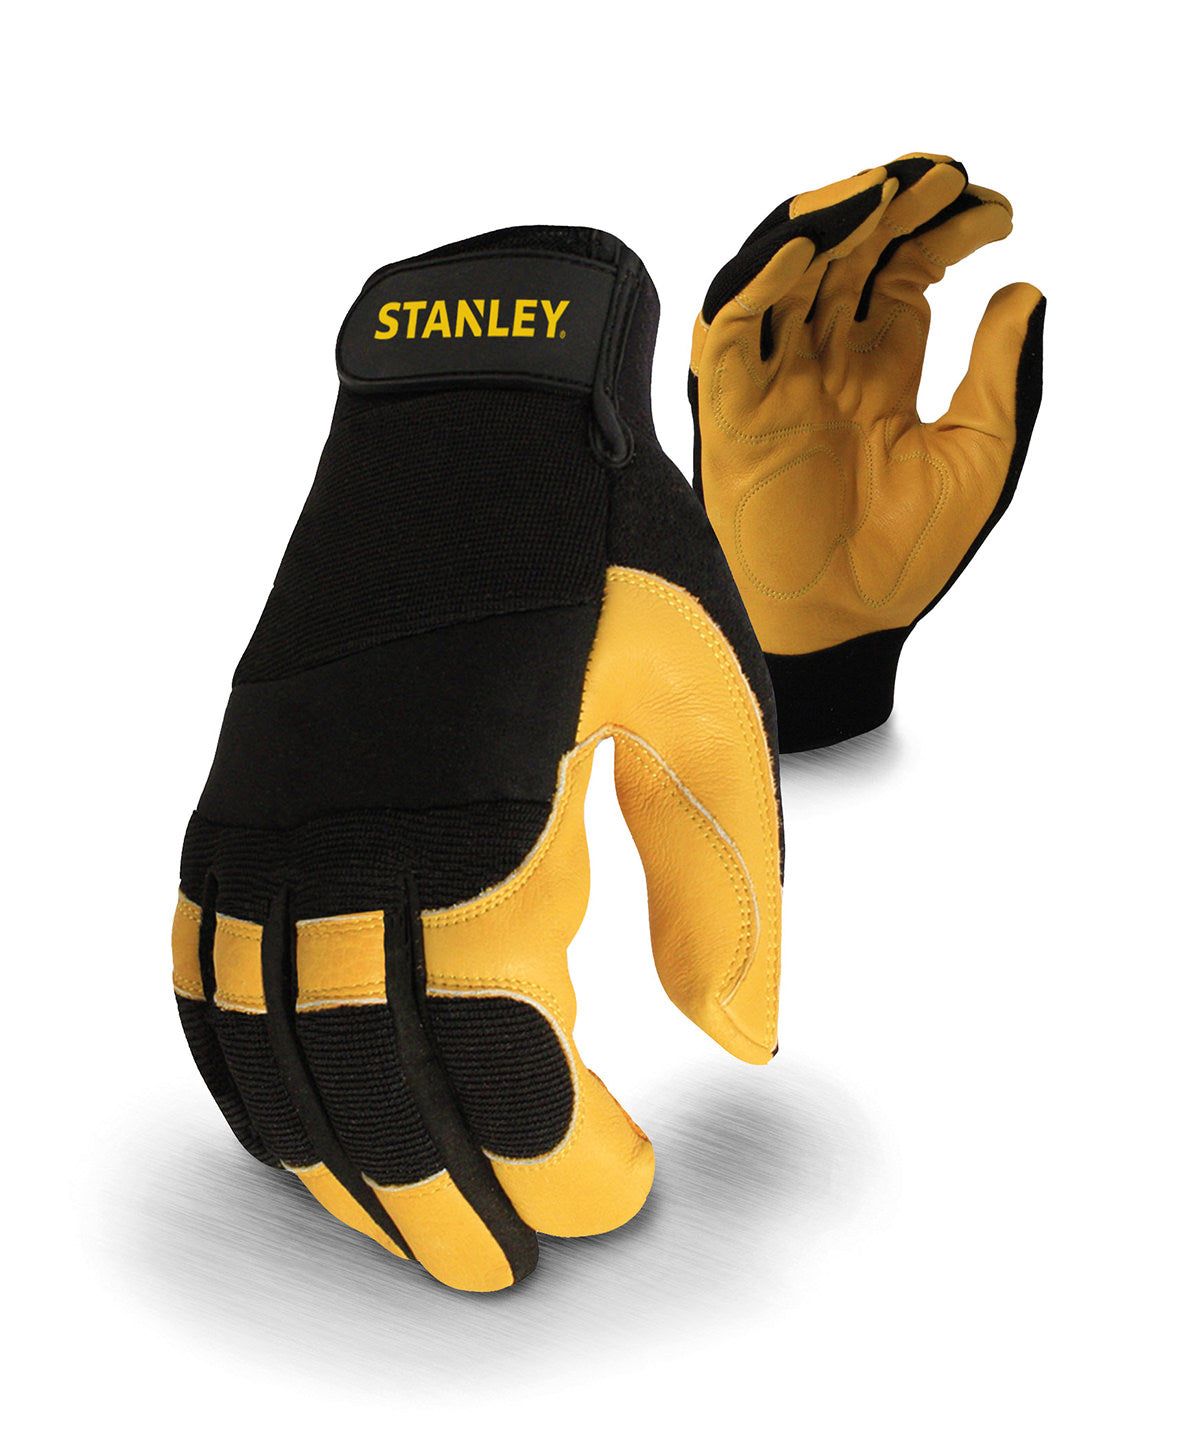 Stanley performance leather hybrid gloves